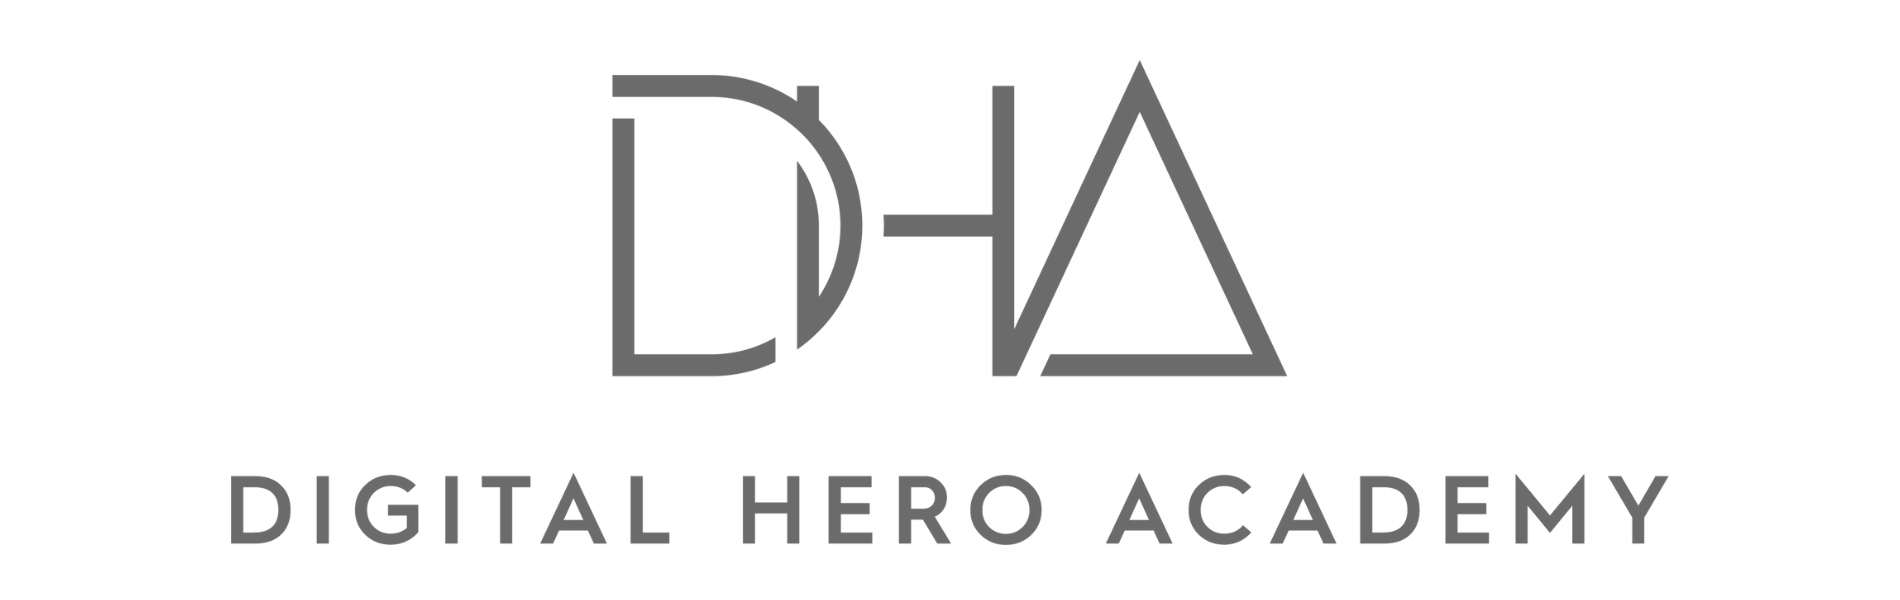 Digital Hero Academy